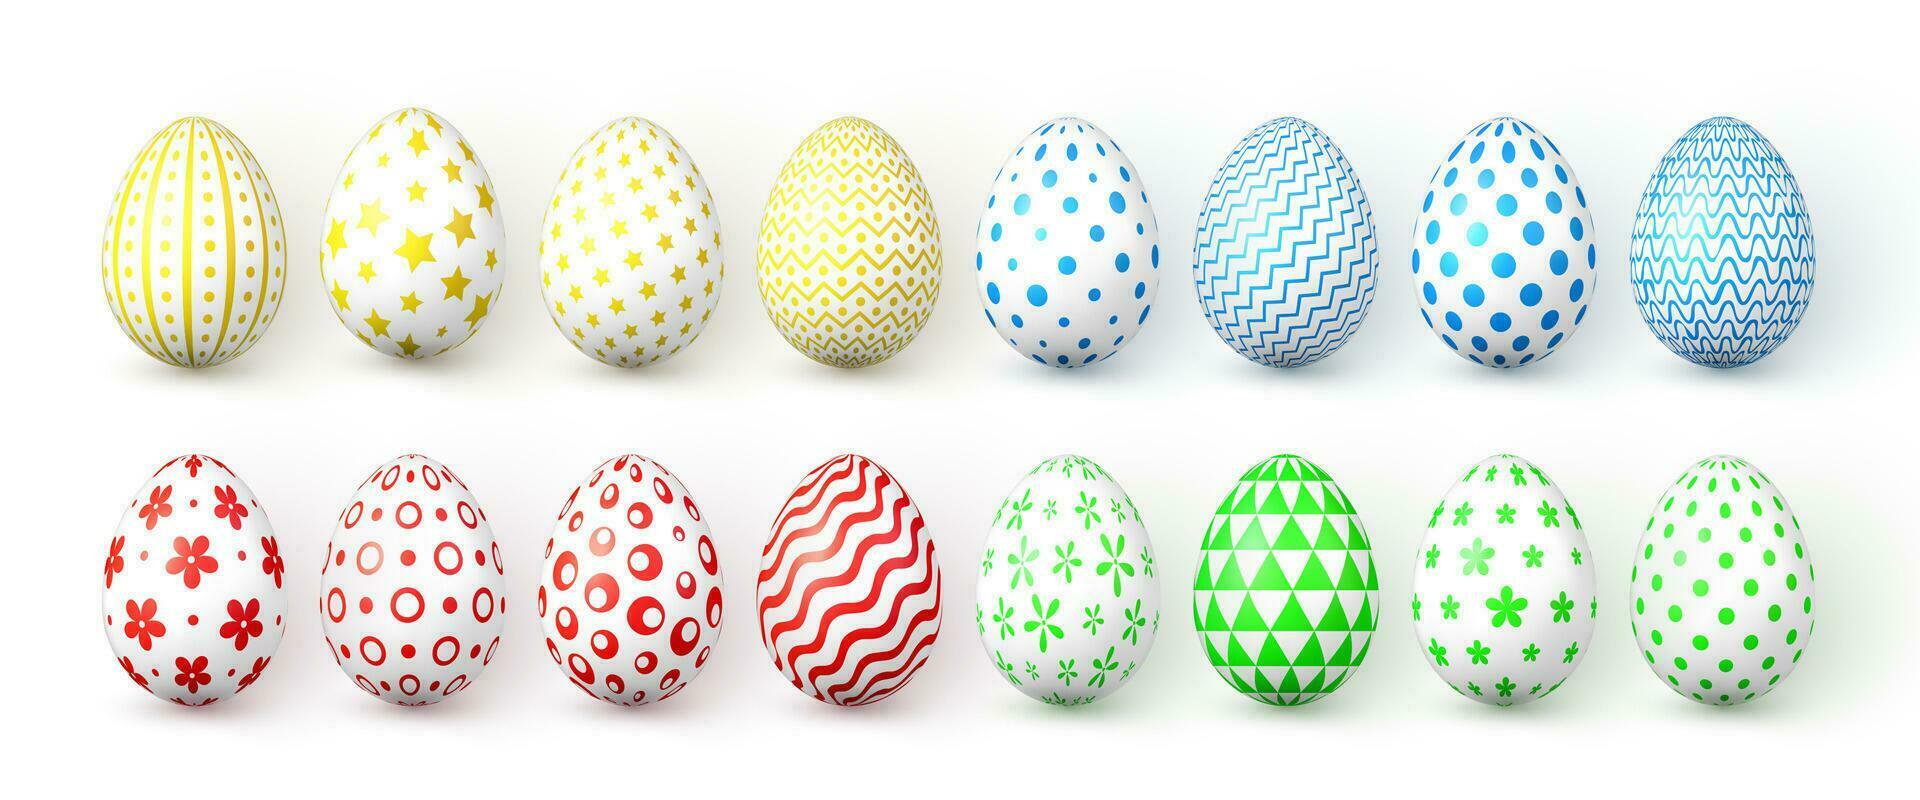 contento Pascua de Resurrección. color Pascua de Resurrección huevos en blanco antecedentes. vector ilustración